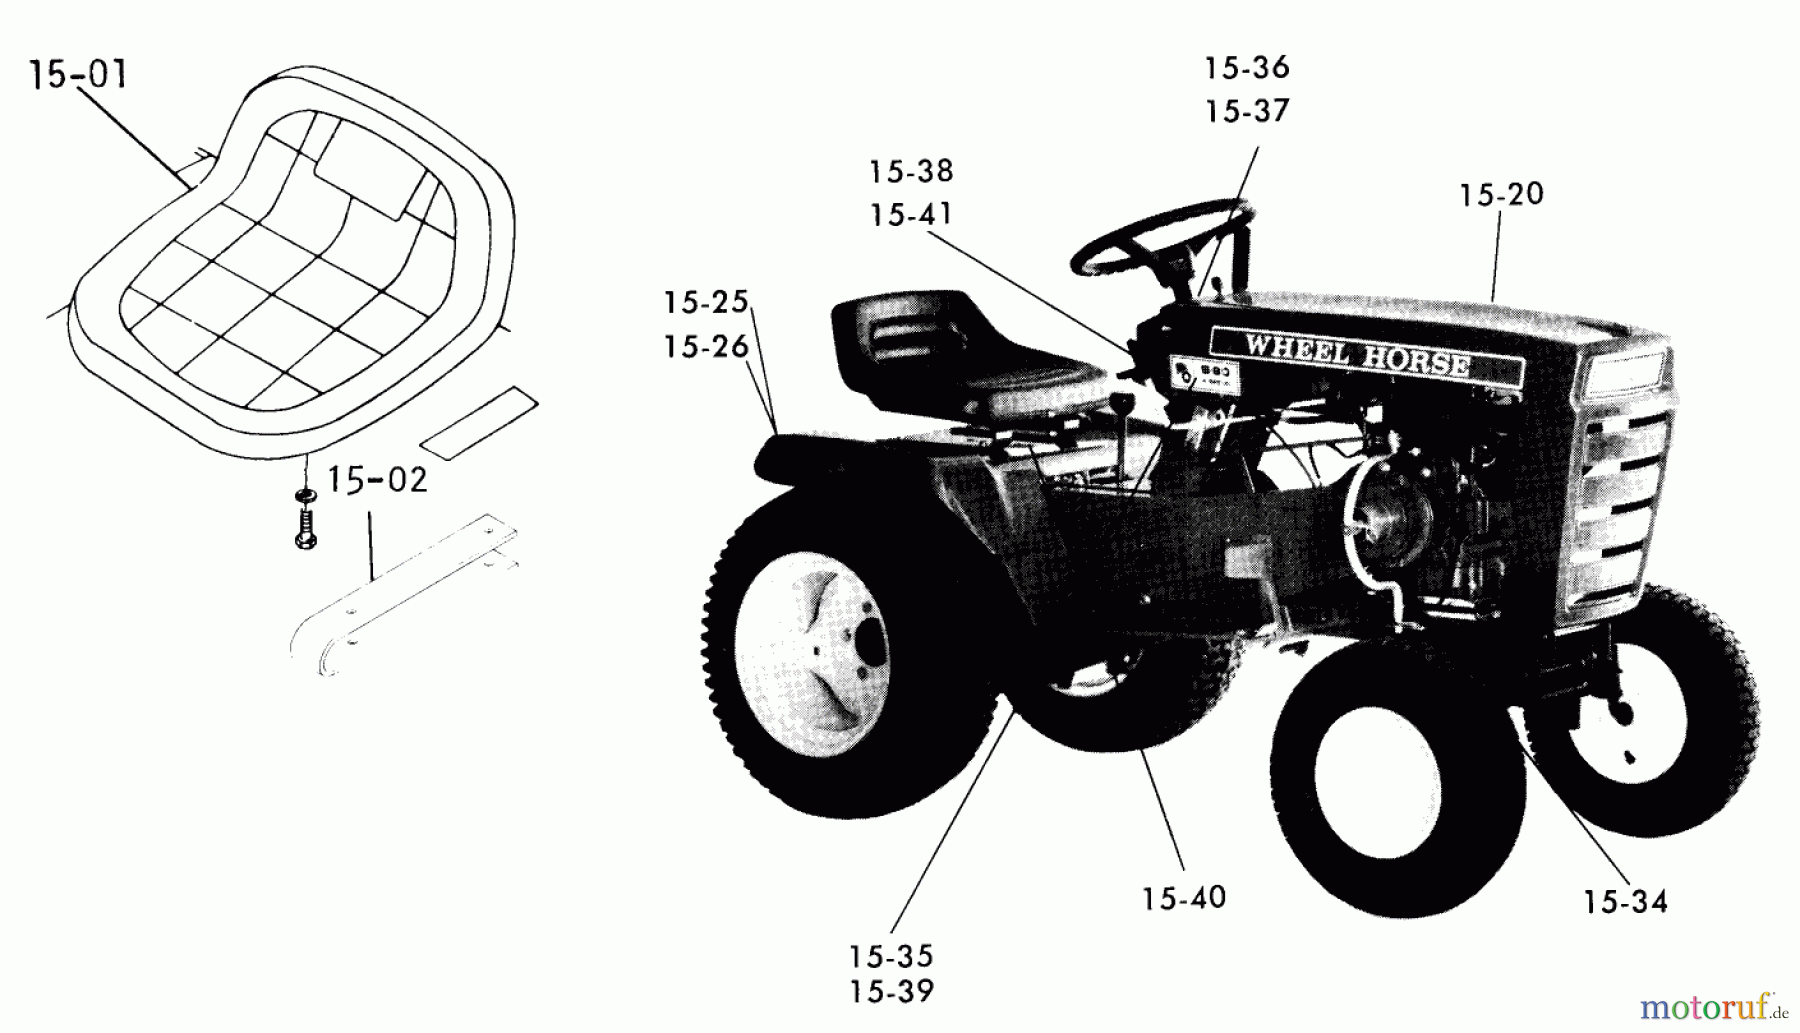  Toro Neu Mowers, Lawn & Garden Tractor Seite 1 1-0145 (B-80) - Toro B-80 4-Speed Tractor, 1974 15.000 SEATS, DECALS, MISC. TRIM (PLATE 15.1)